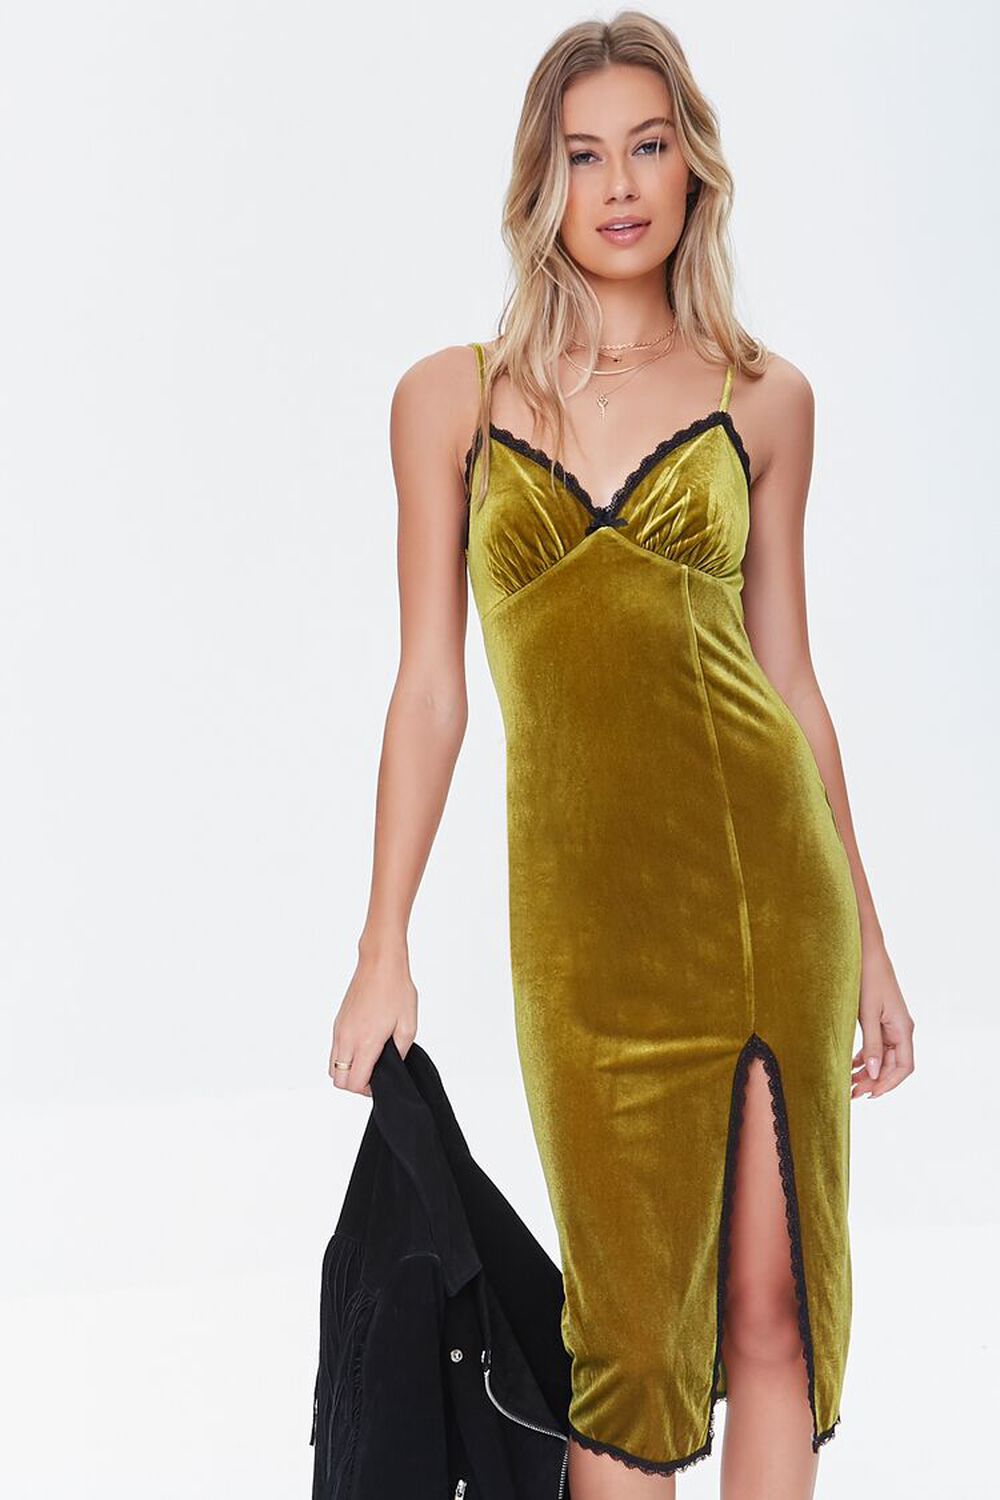 GOLD Velvet Lace-Trim Midi Dress, image 2